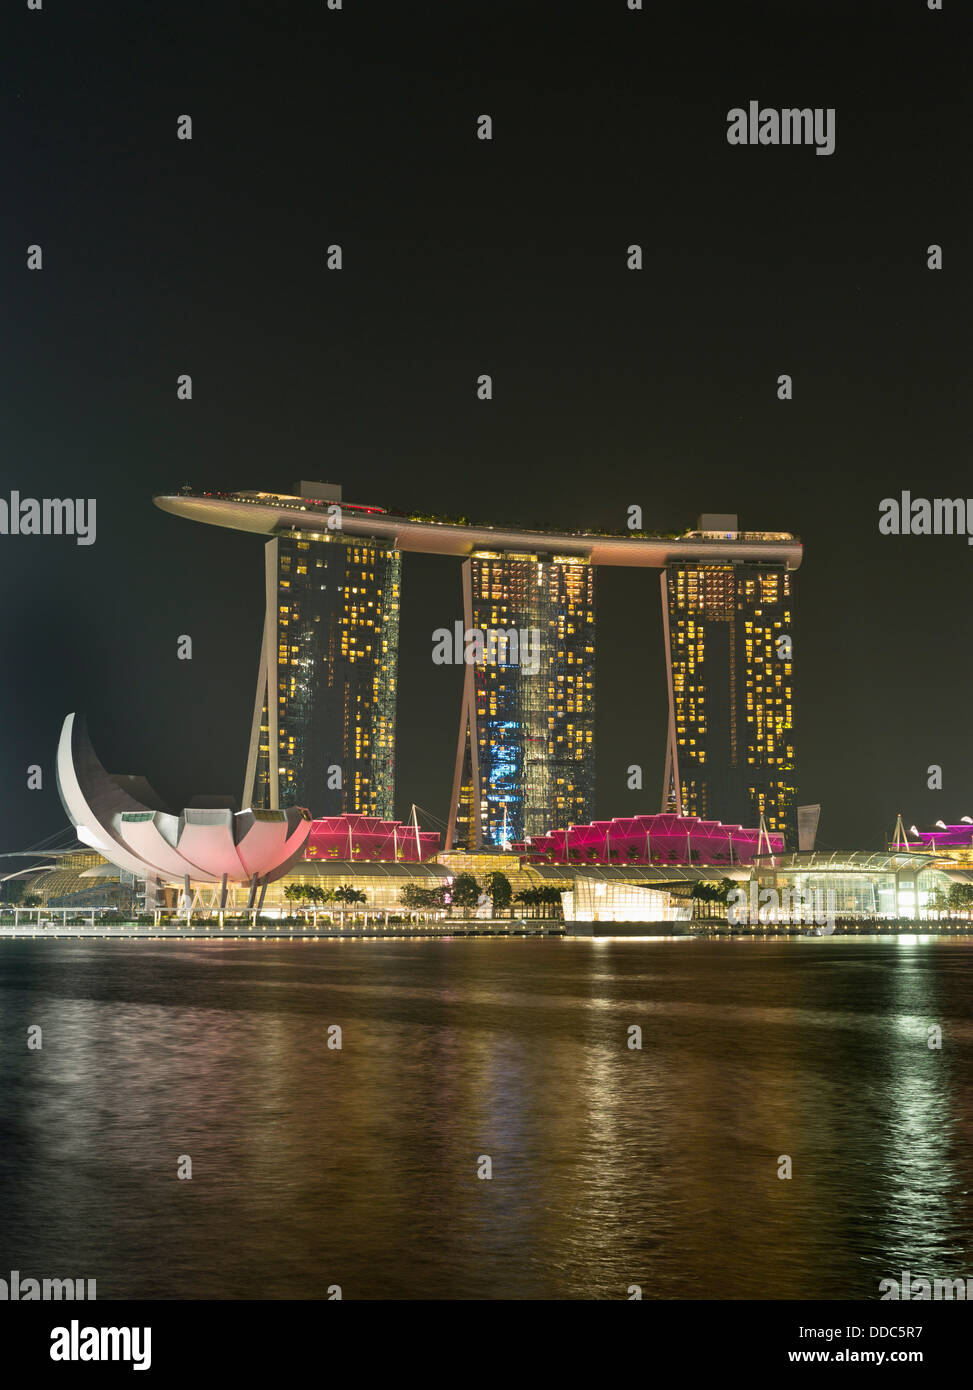 Dh Marina Bay DOWNTOWN CORE SINGAPUR Abend Nacht beleuchtung Dämmerung Marina Bay Sands Hotel hotels Skyline Stockfoto